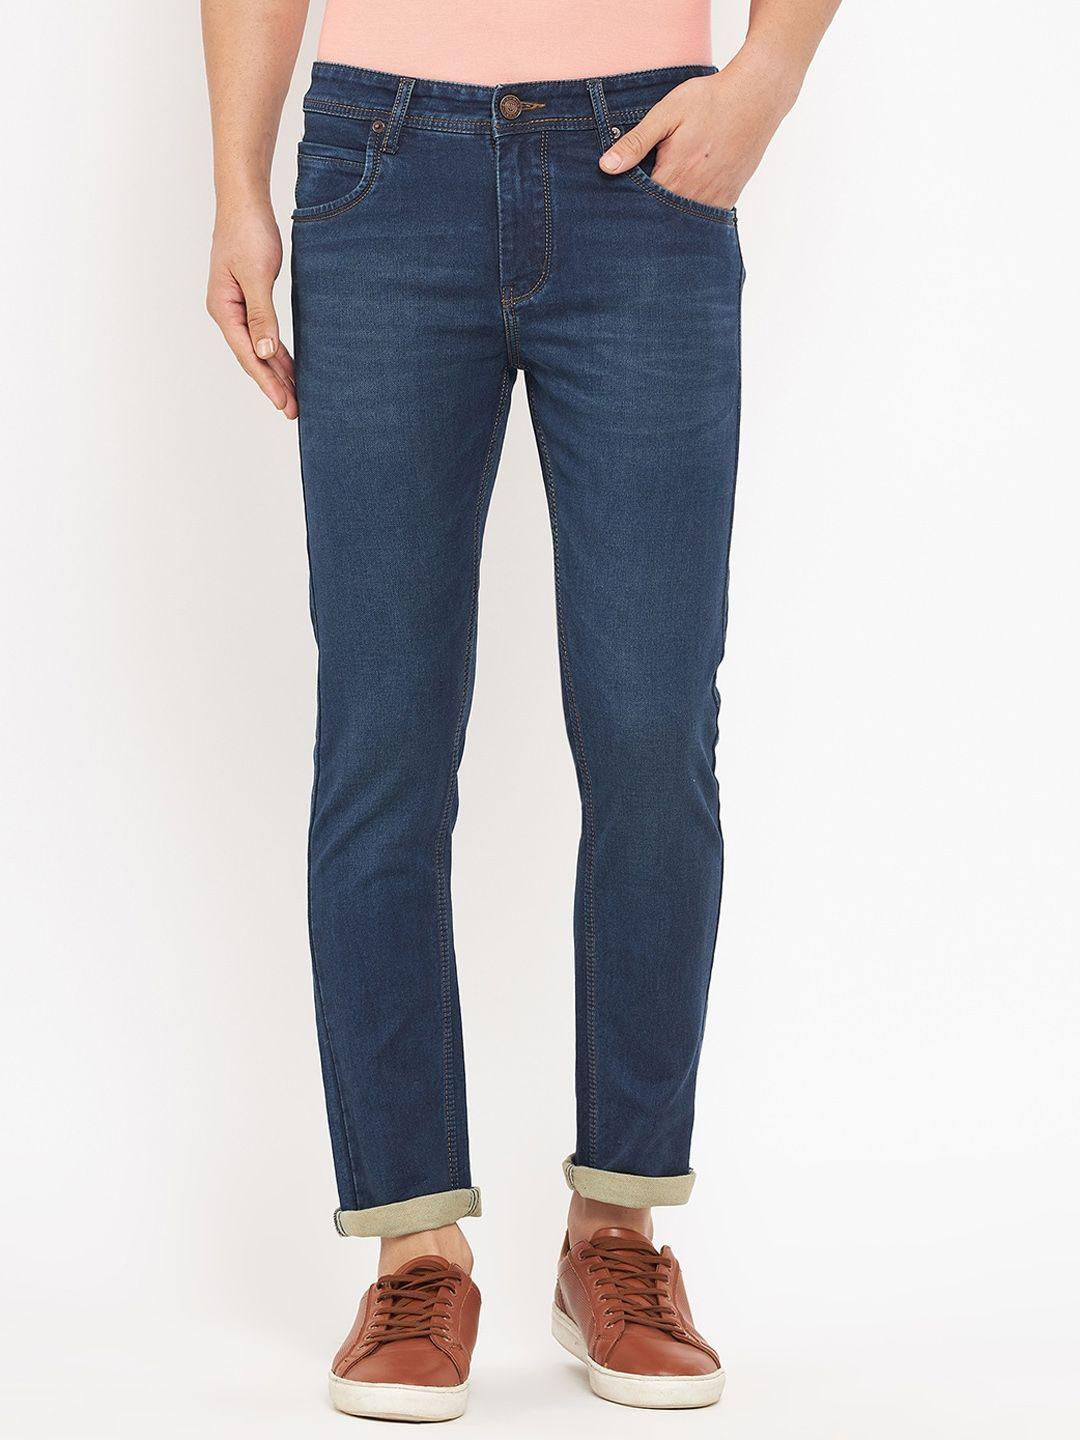 duke-men-cotton-slim-fit-light-fade-jeans